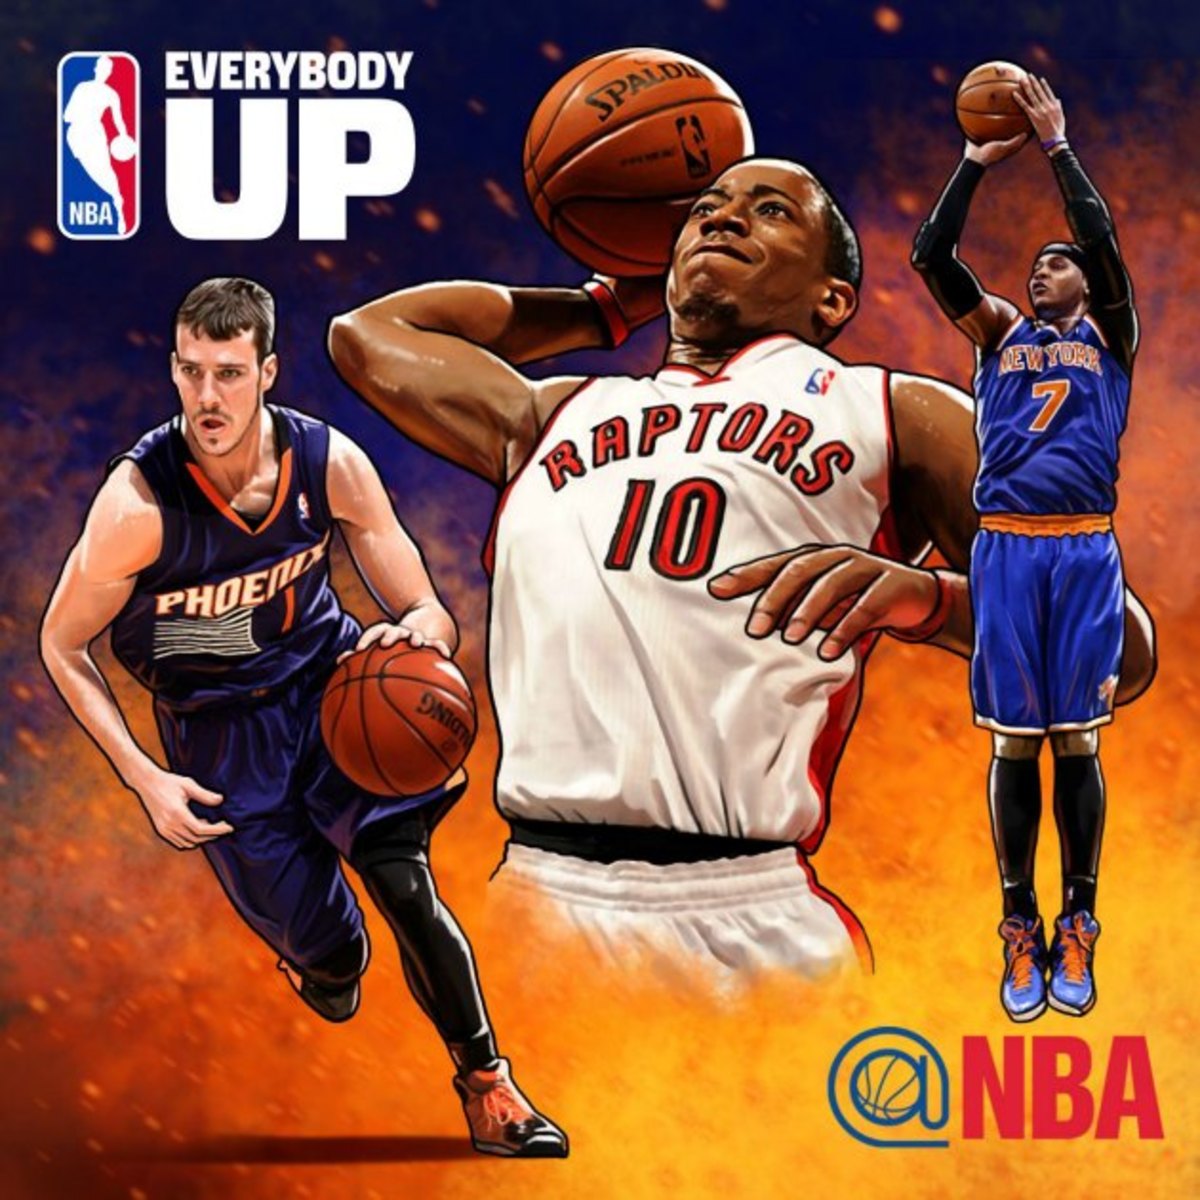 NBA-season-tip-off-Everybody-up-5.jpg